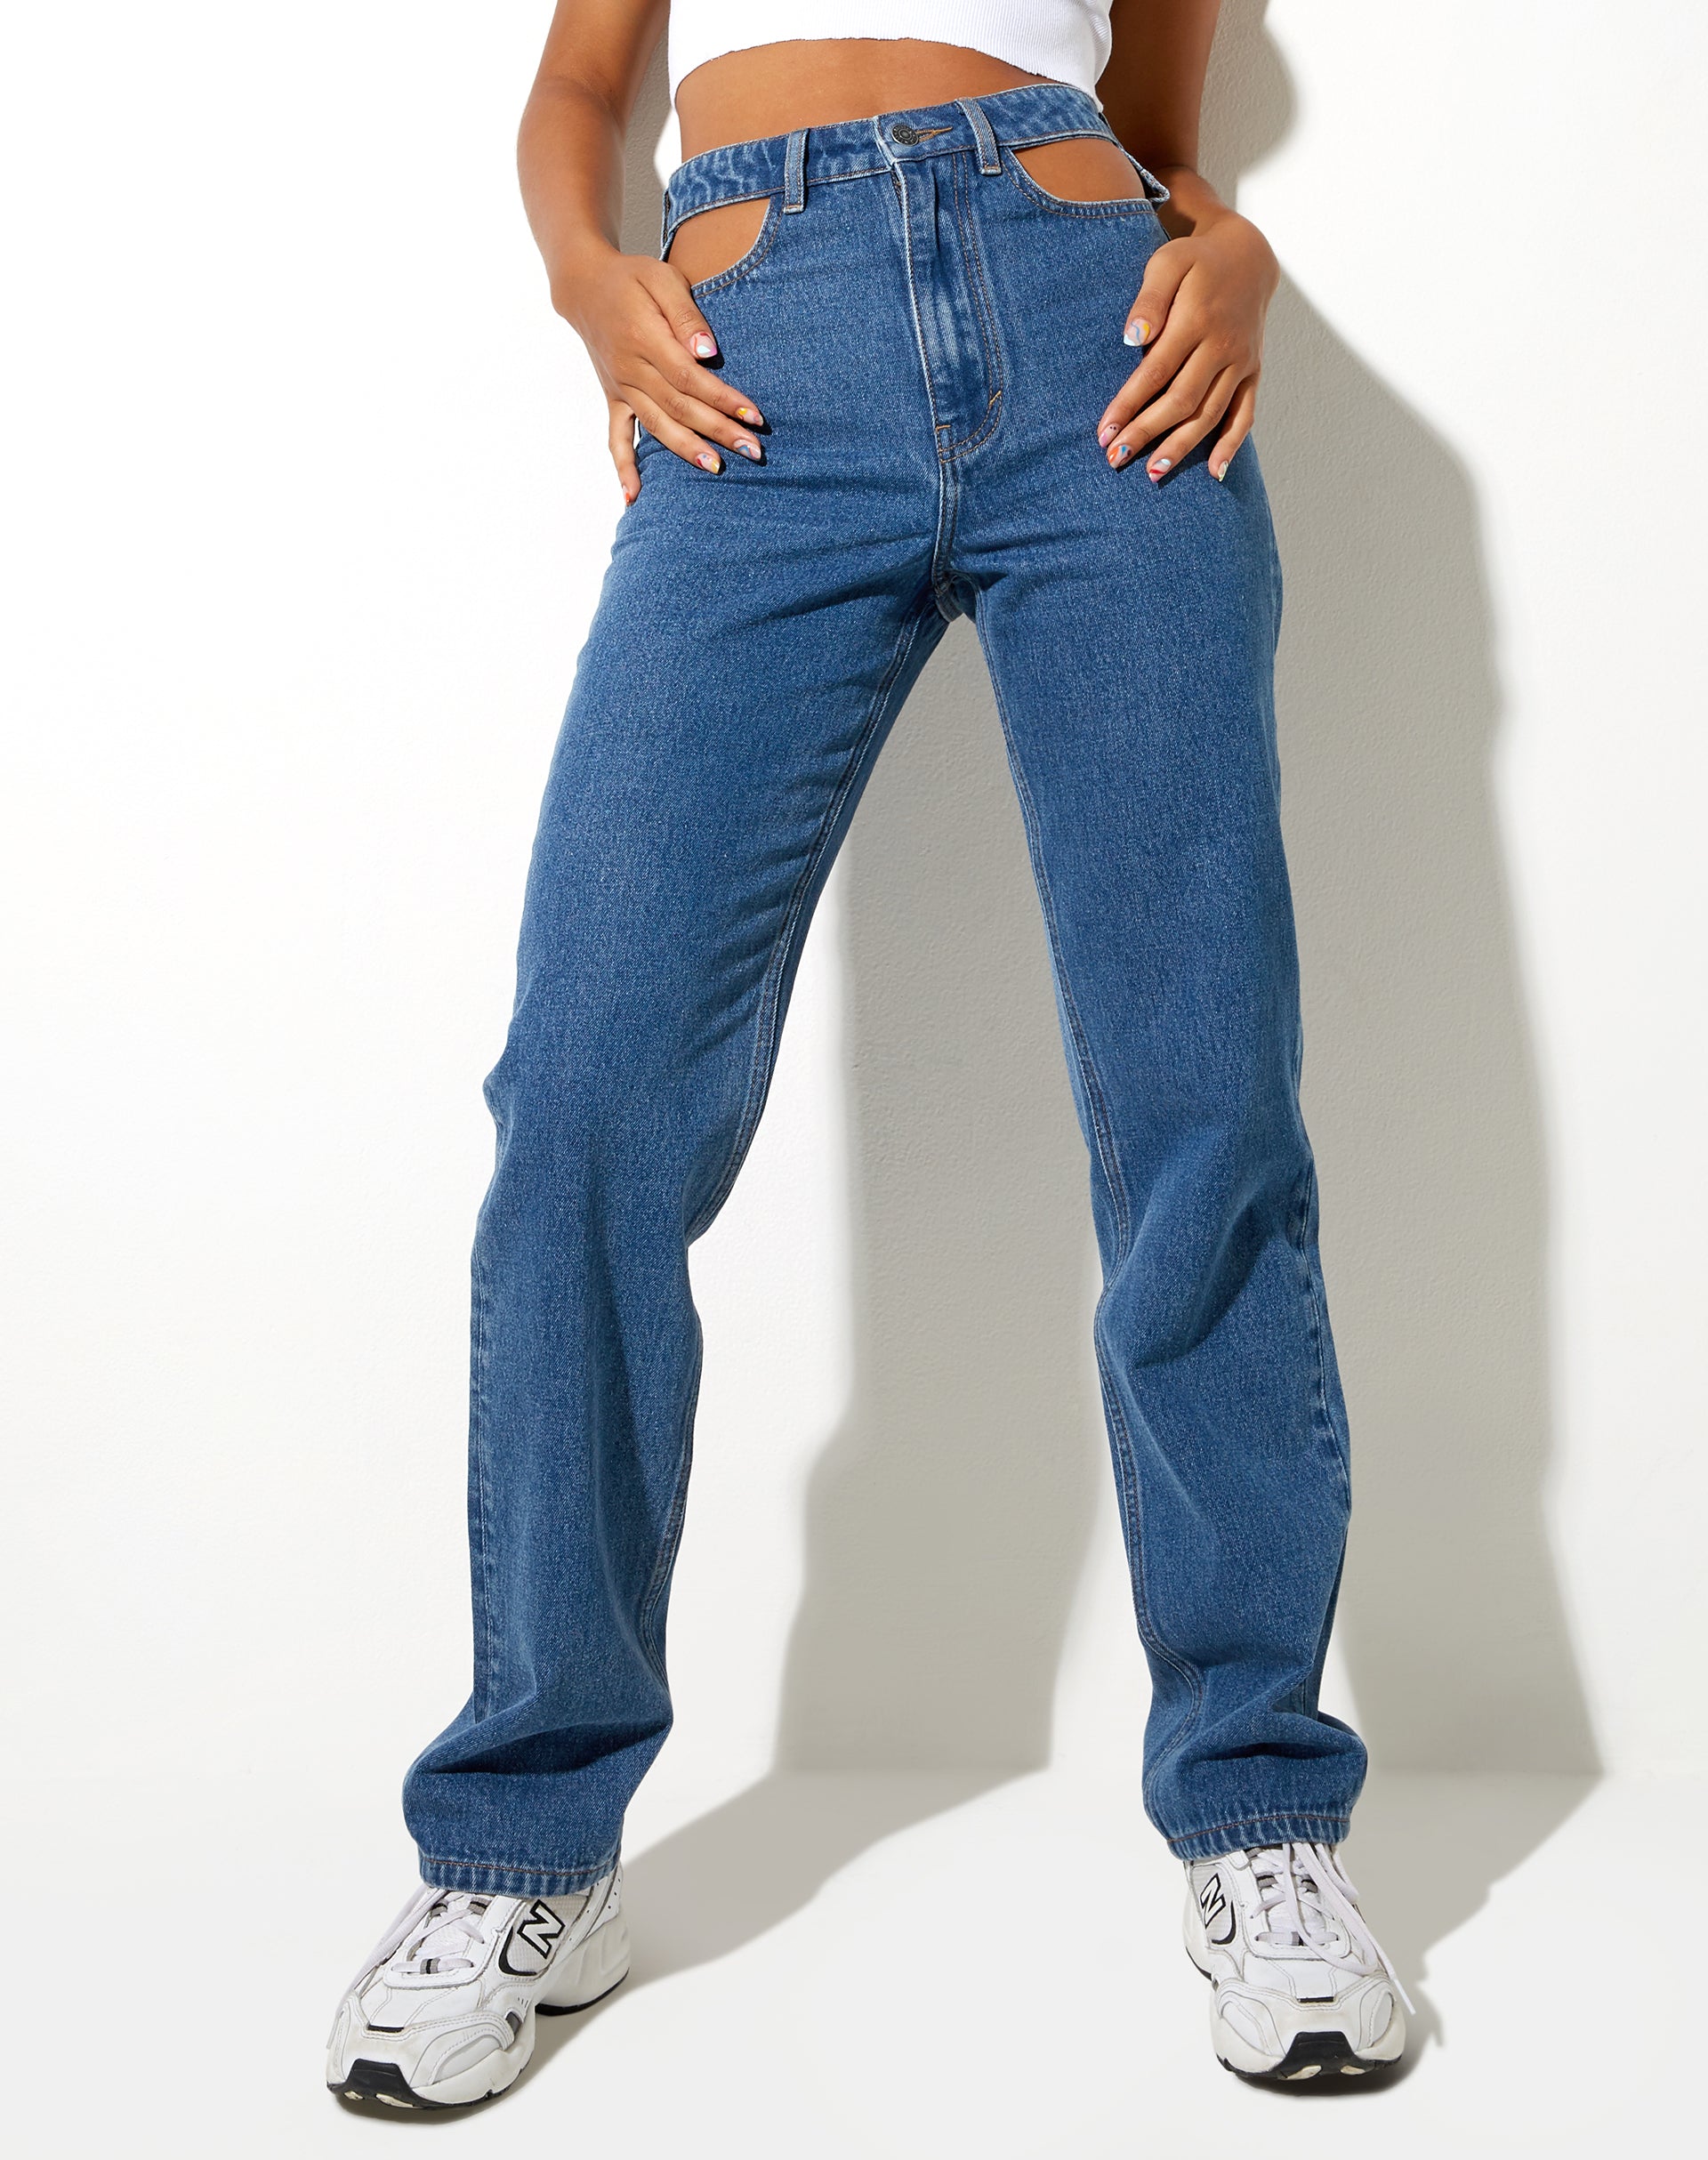 Feather Soft Straight Regular Jeans - Pale denim blue - Ladies | H&M IN